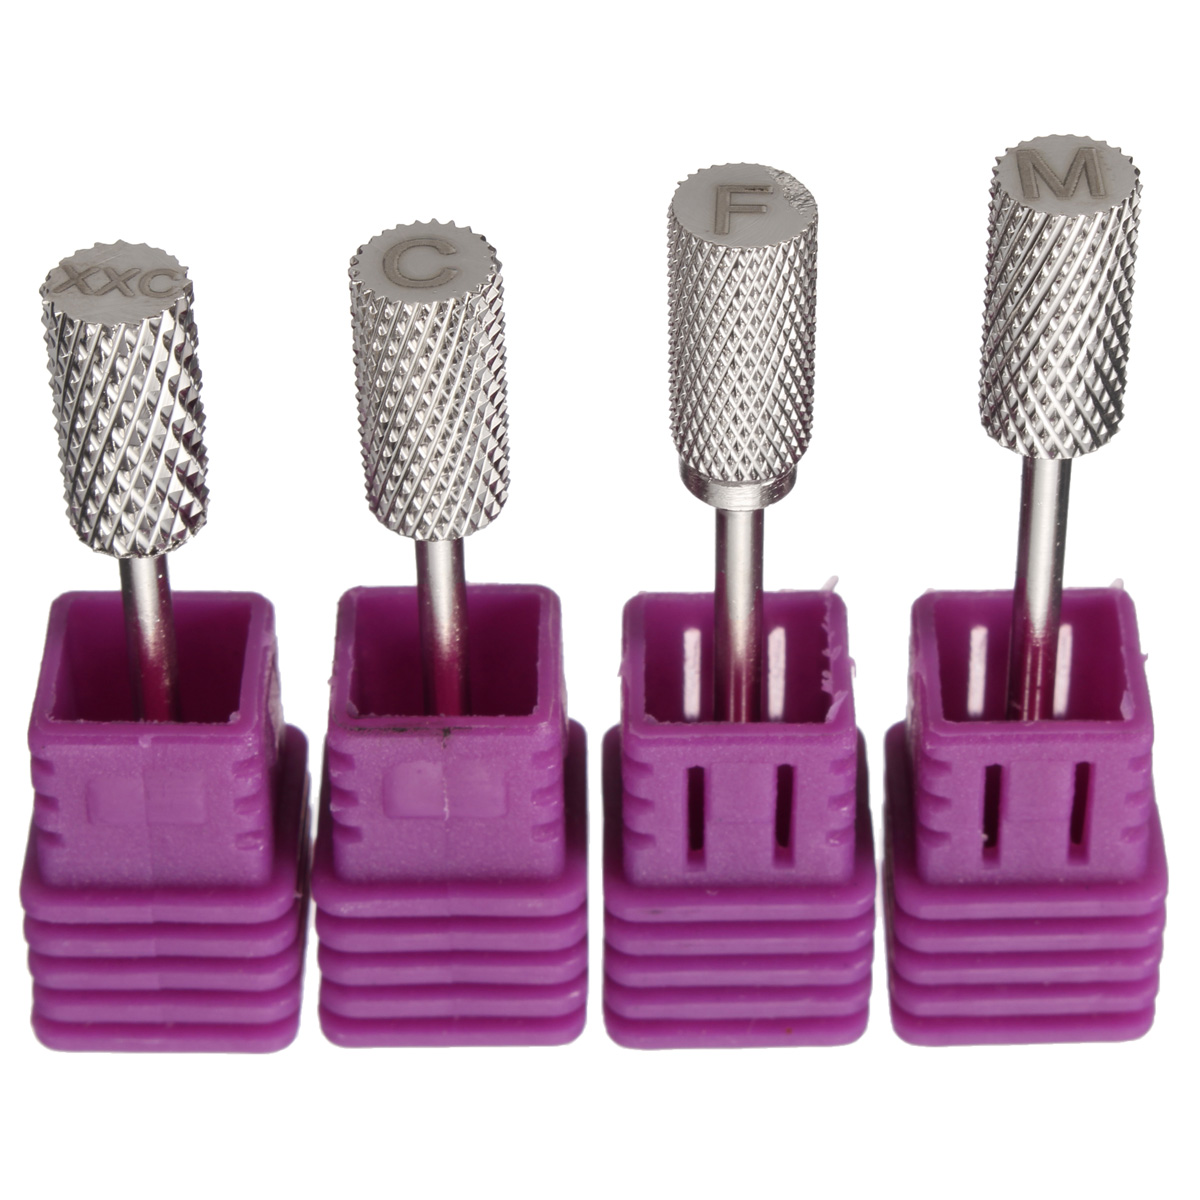 4pcs-Electric-Carbide-Nail-File-Drill-Bits-Kit-Polish-Cylindrical-Manicure-Tools-1107089-6